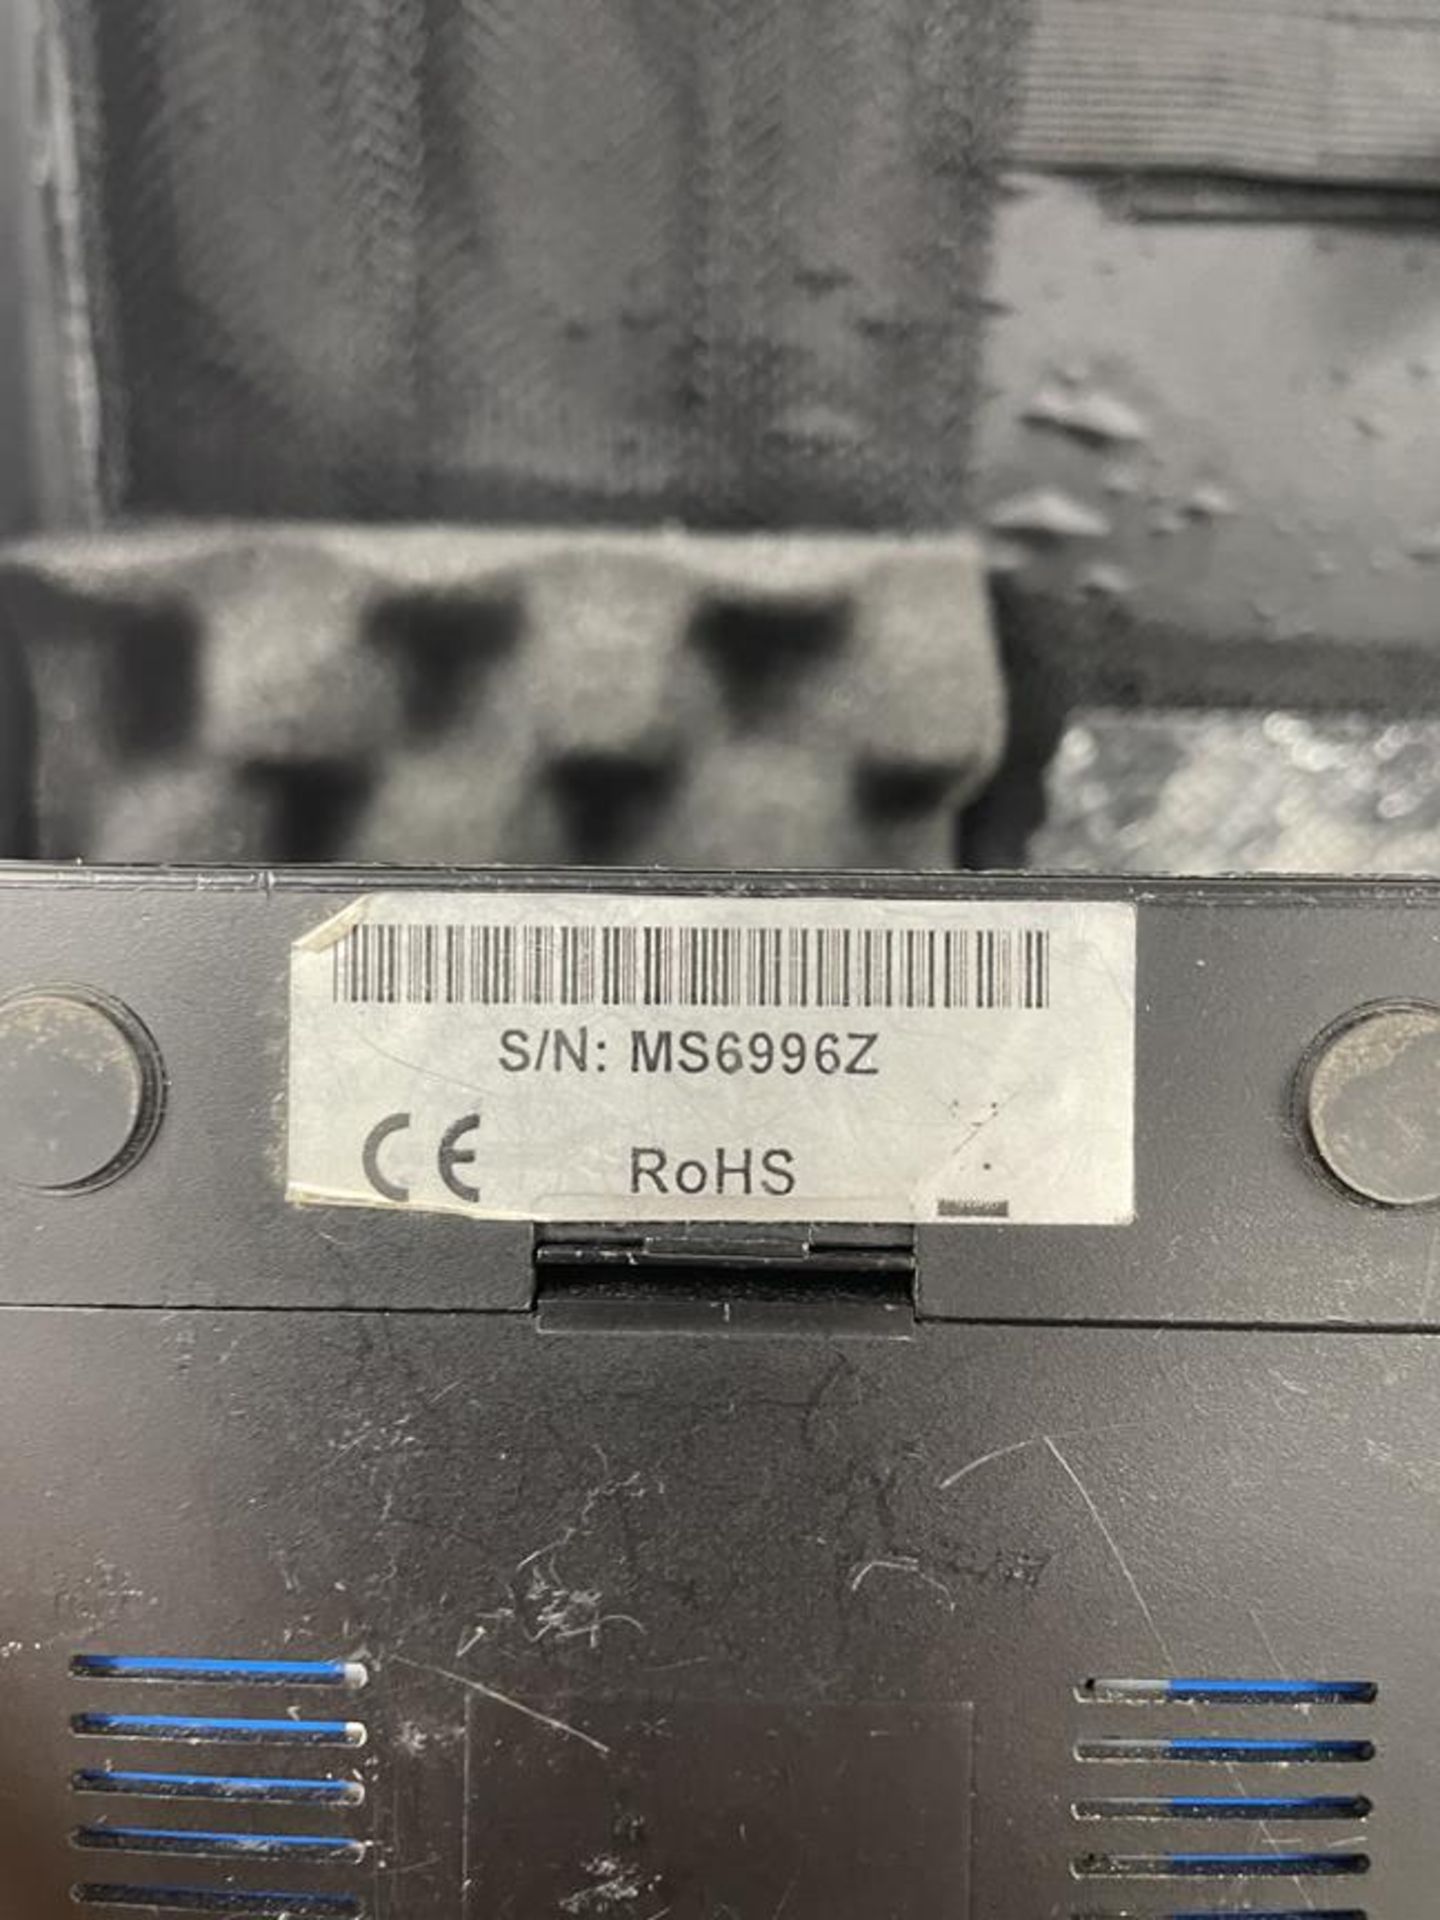 Lightel Fiber Connector Inspector Kit S/No. MS6996Z (GB REF#4) - Image 2 of 2